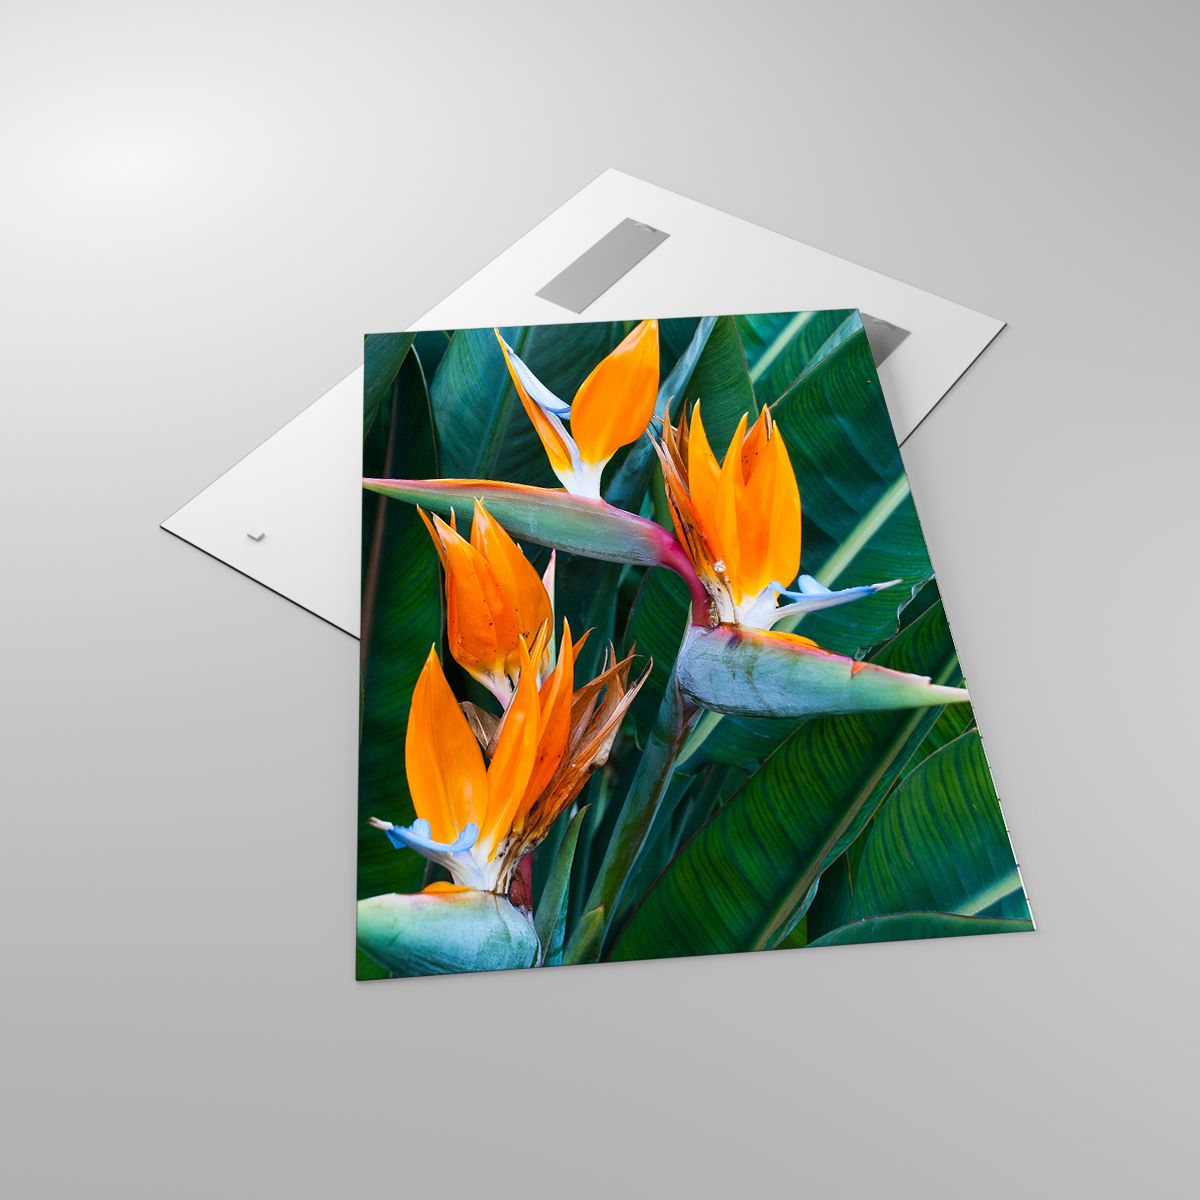 Glasbild Königliche Strelitzie, Glasbild Blume, Glasbild Afrika, Glasbild Tropen, Glasbild Exotische Pflanze